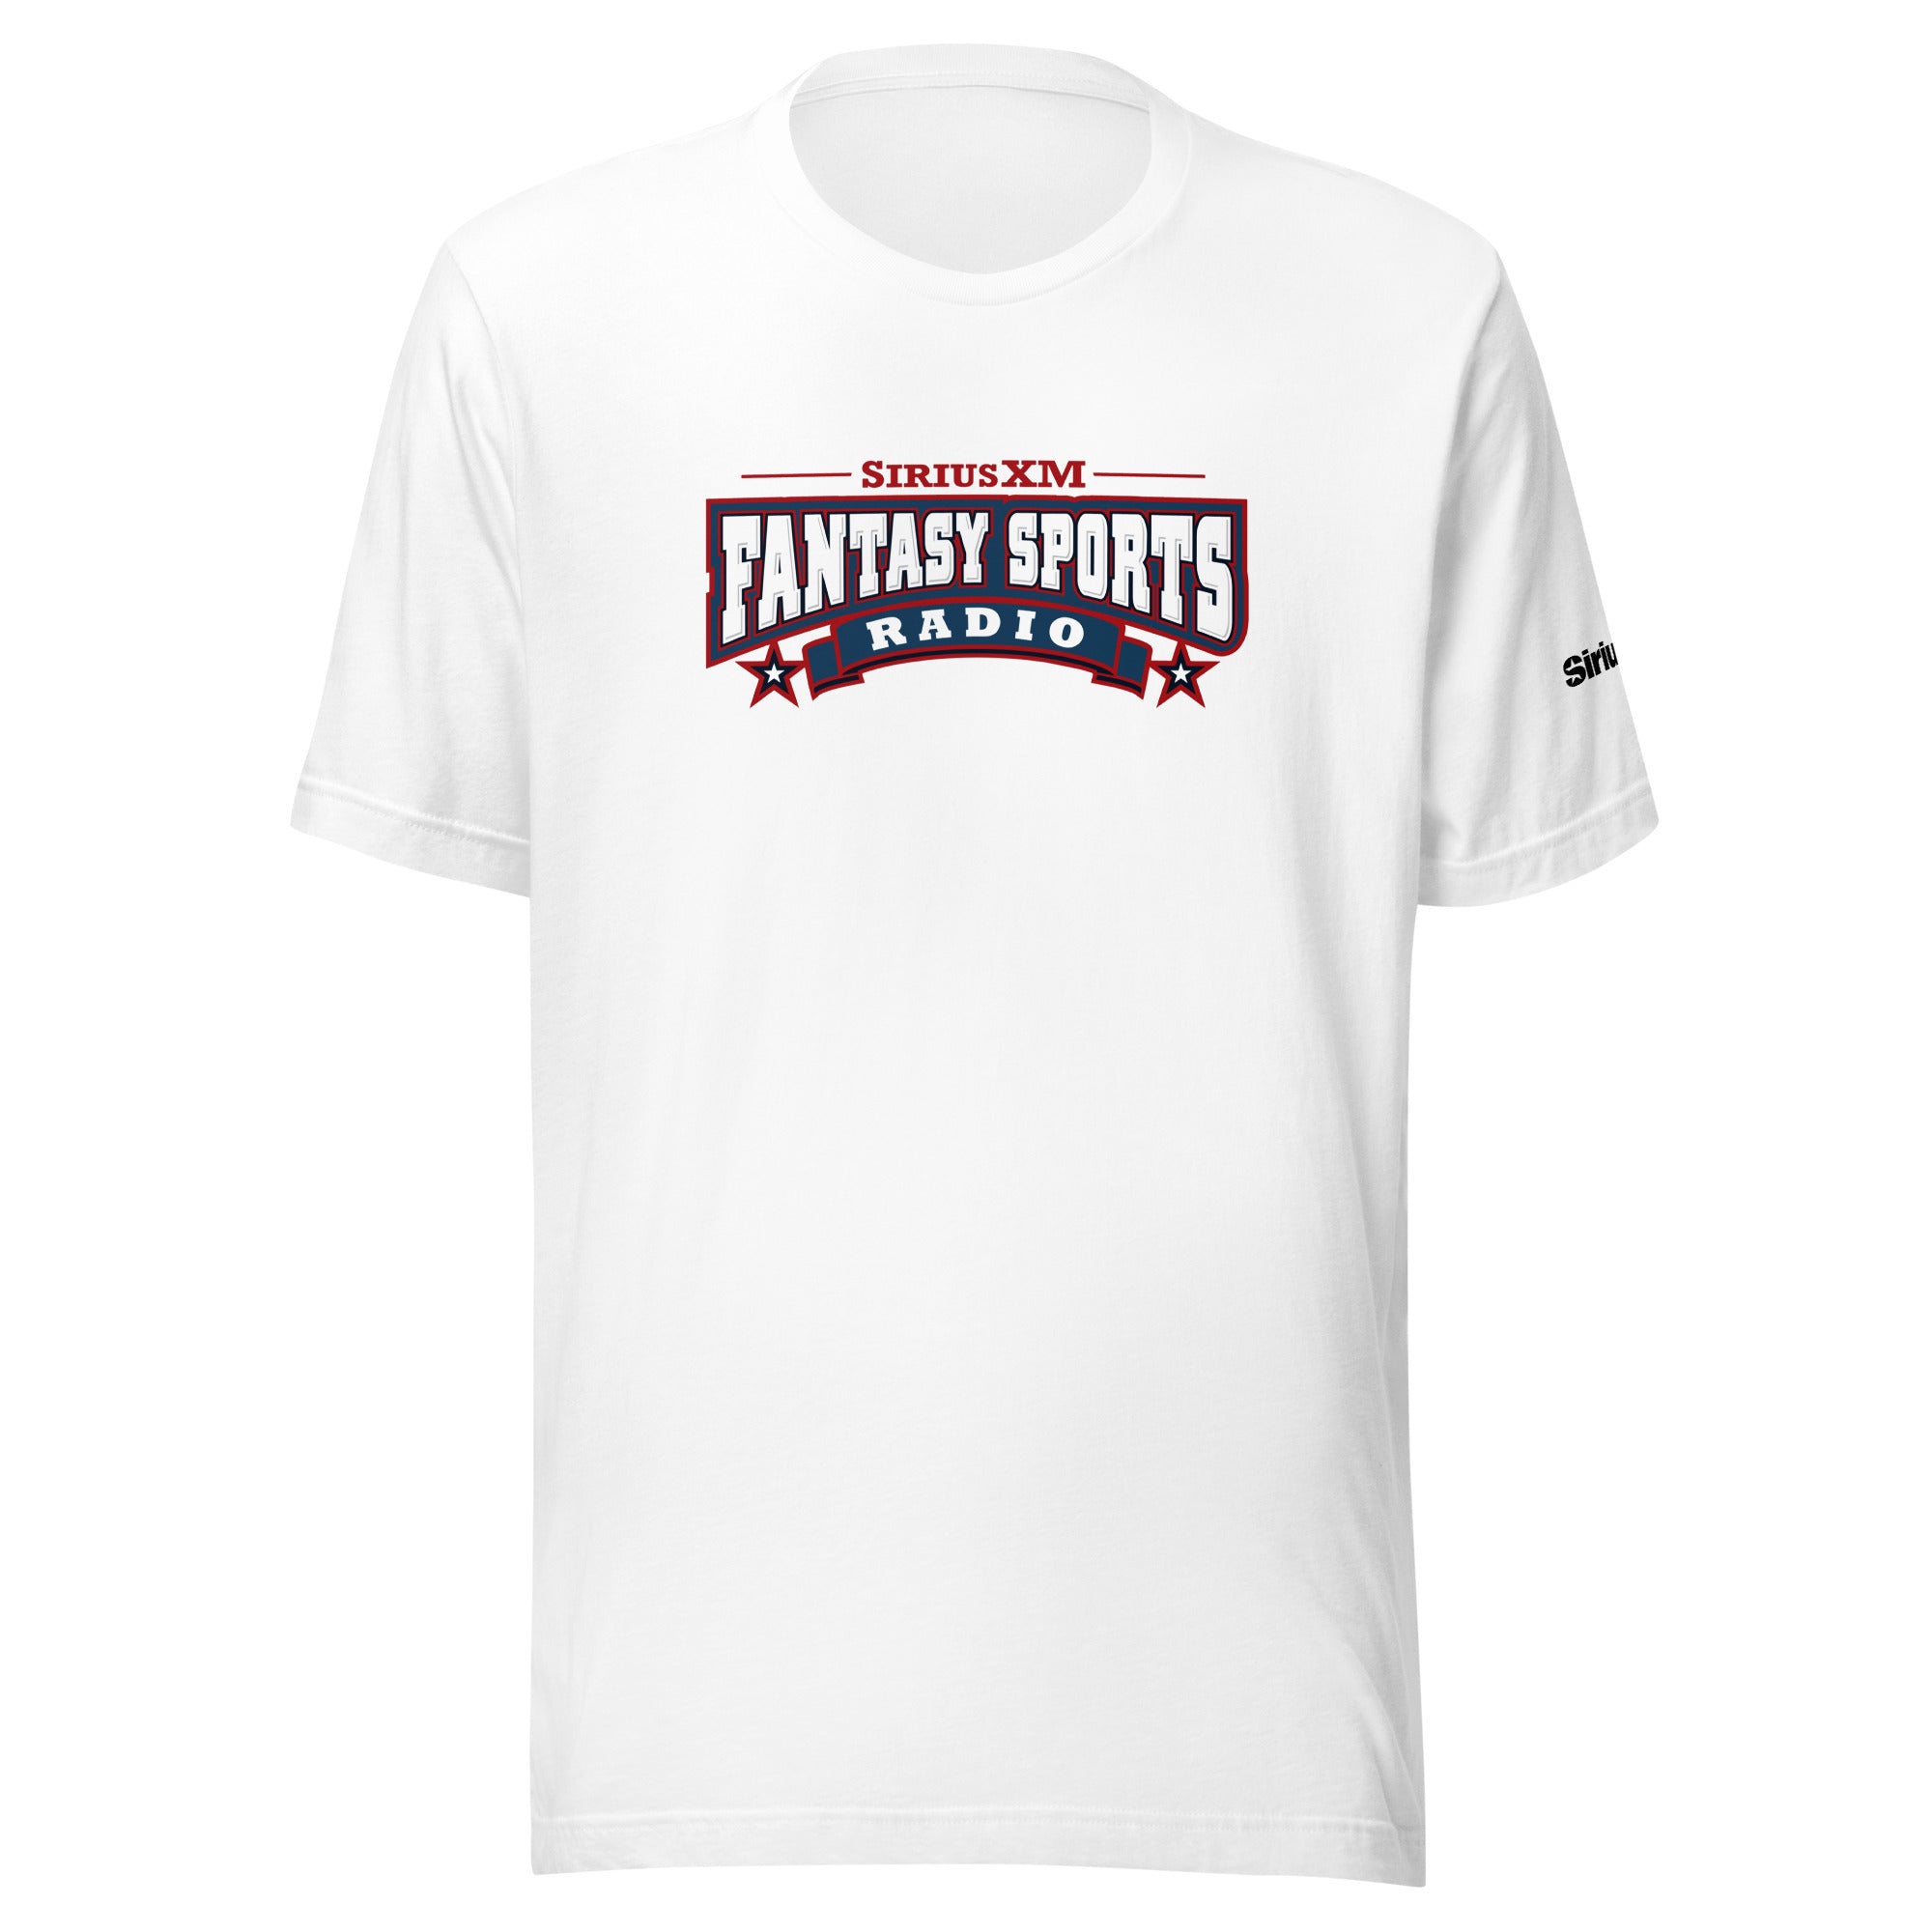 Fantasy Sports Radio: T-shirt (White)